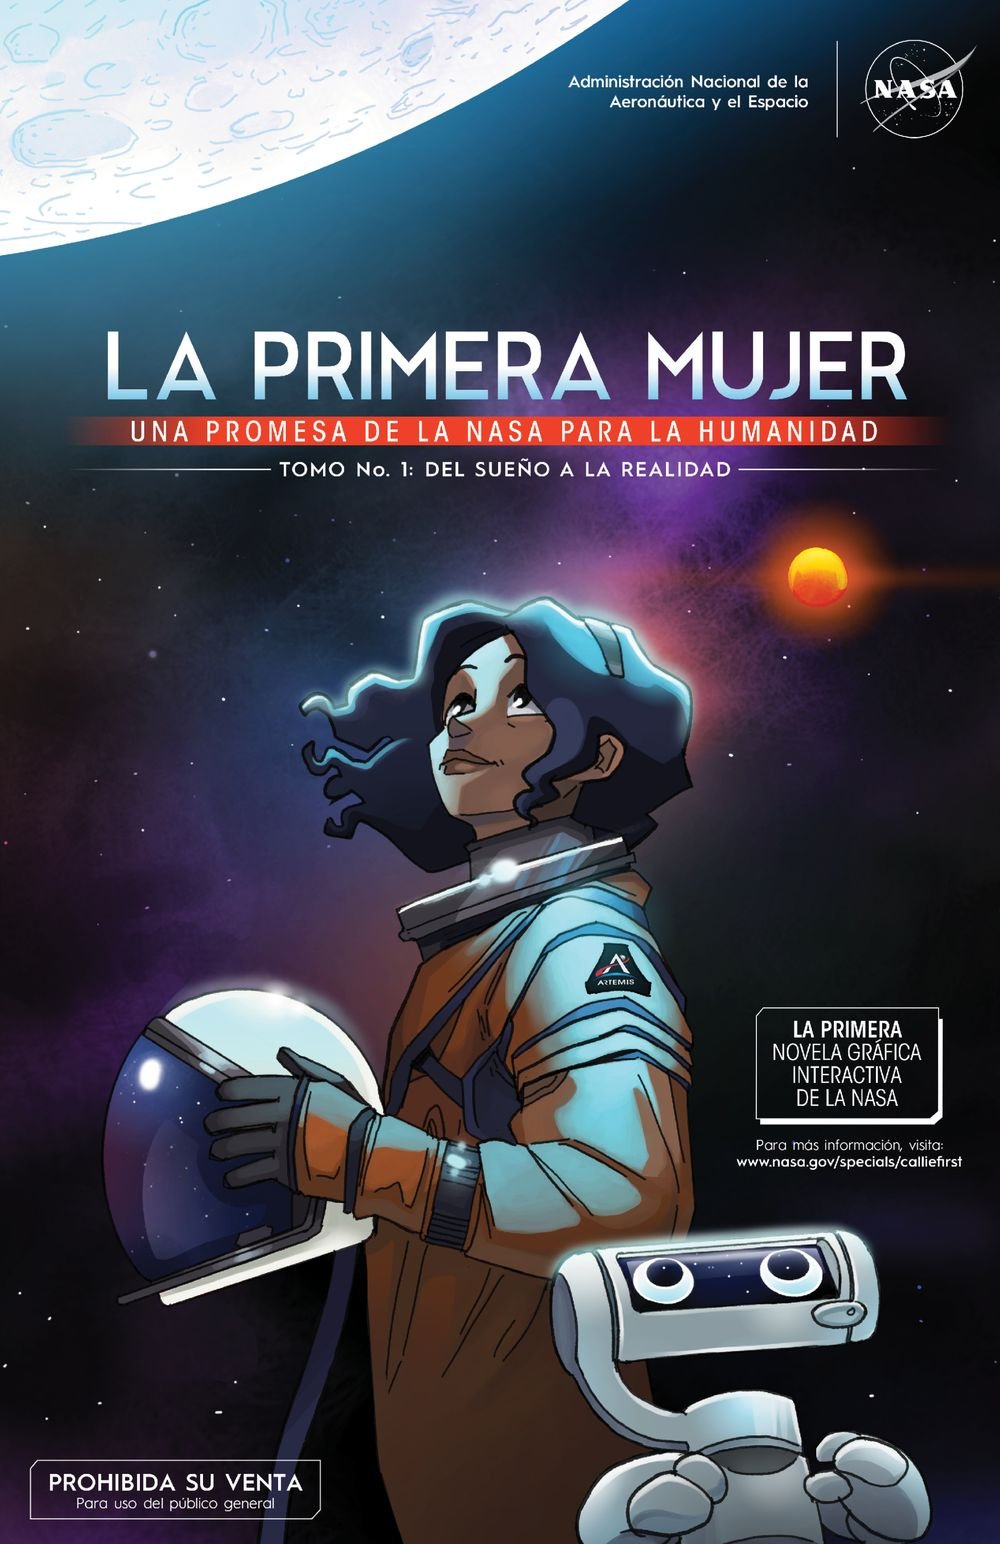  La Primera Mujer Novela Grafica Interactiva de la NASA (First Woman Graphic Novel and Interactive Experience)